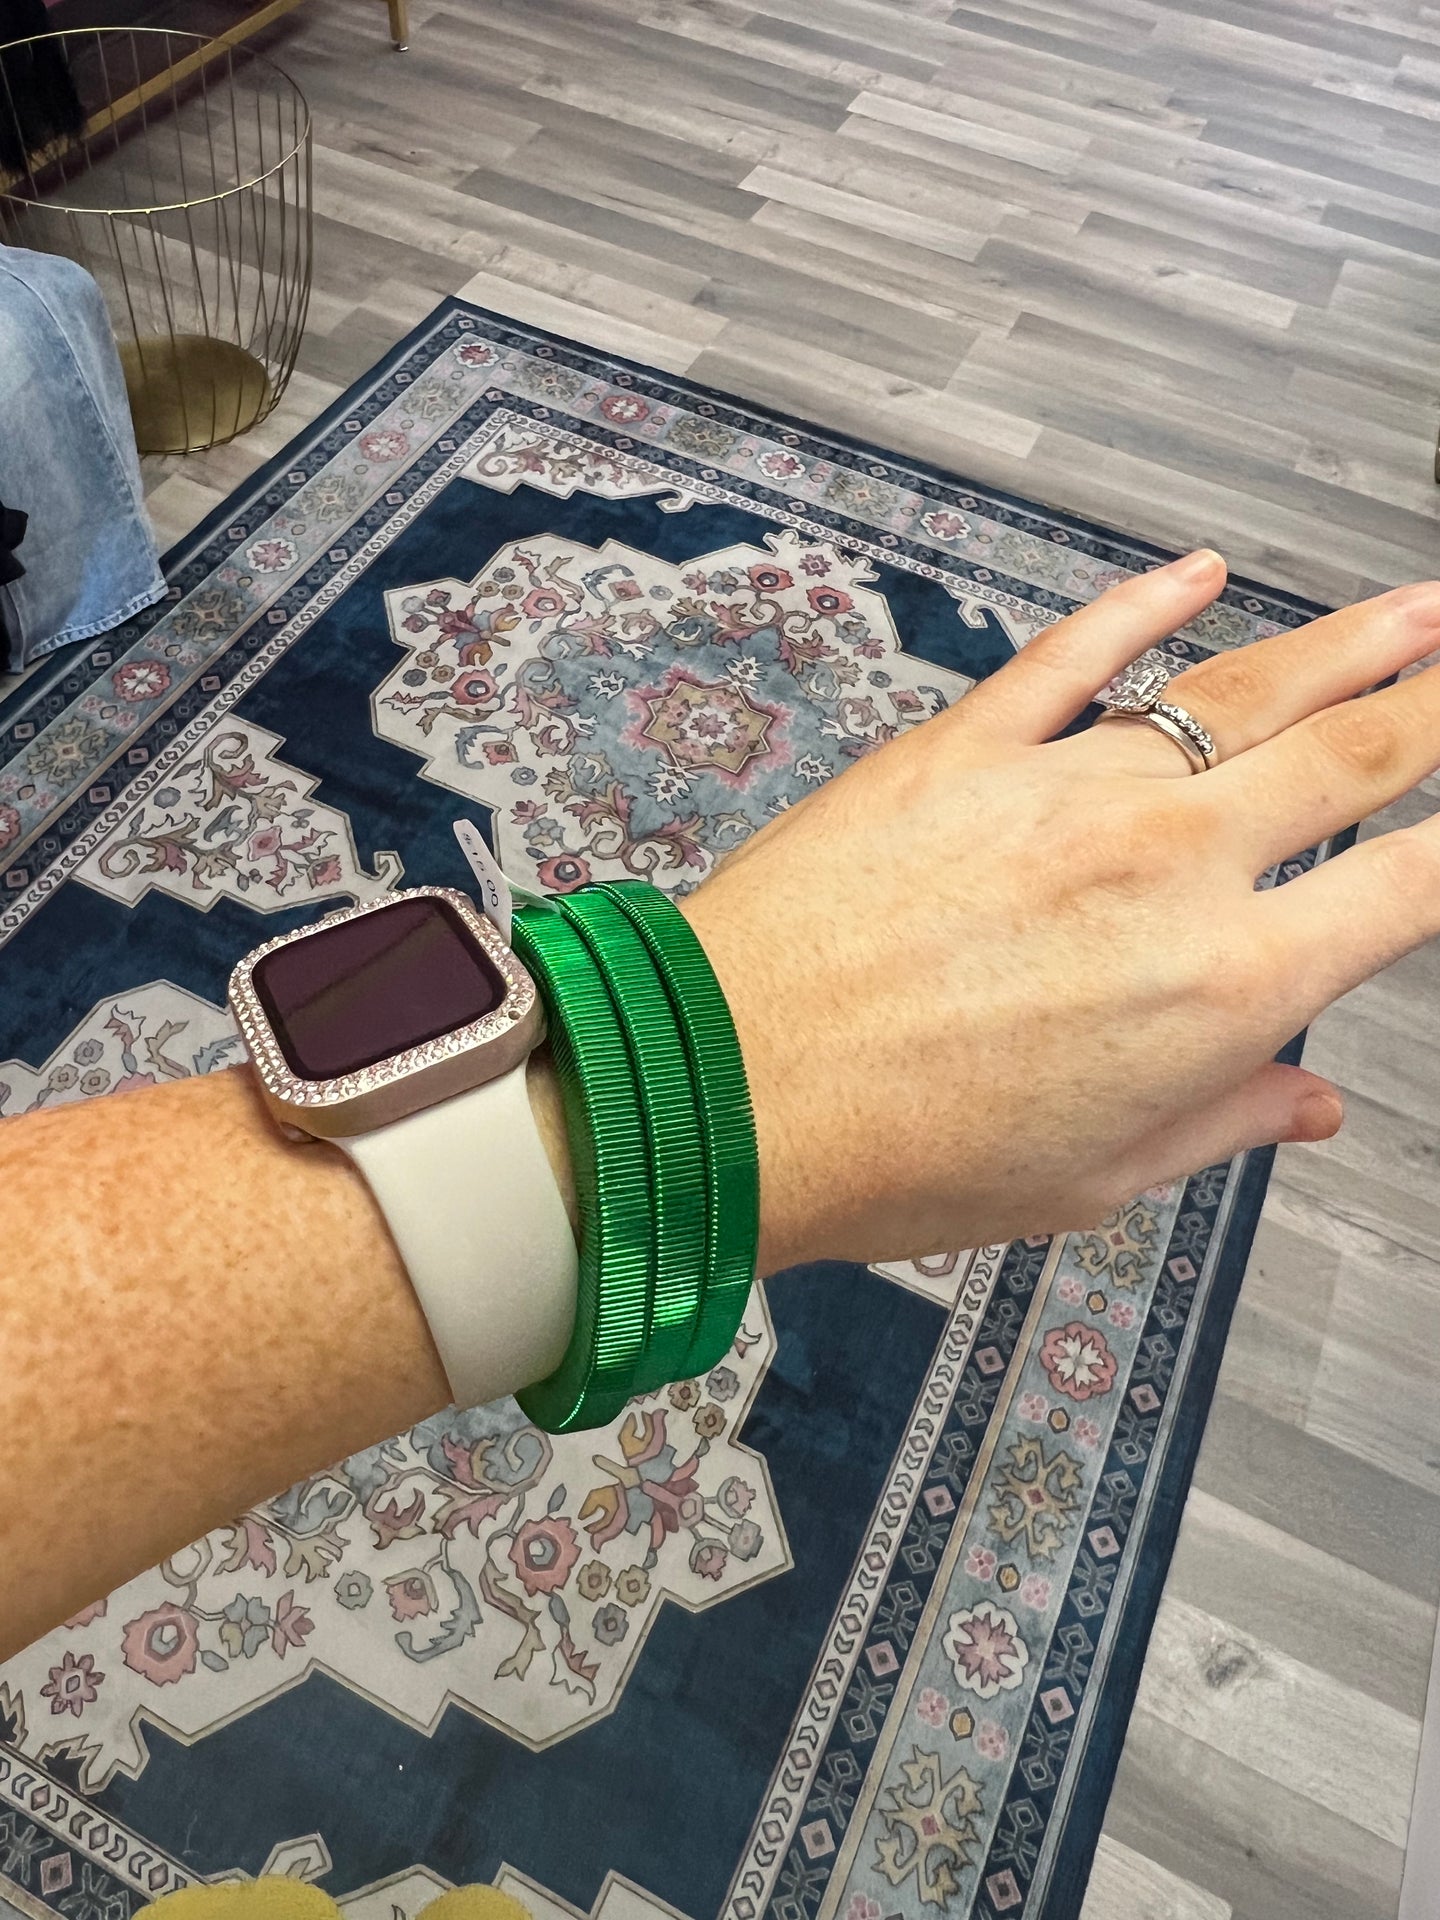 Green stretch bracelet